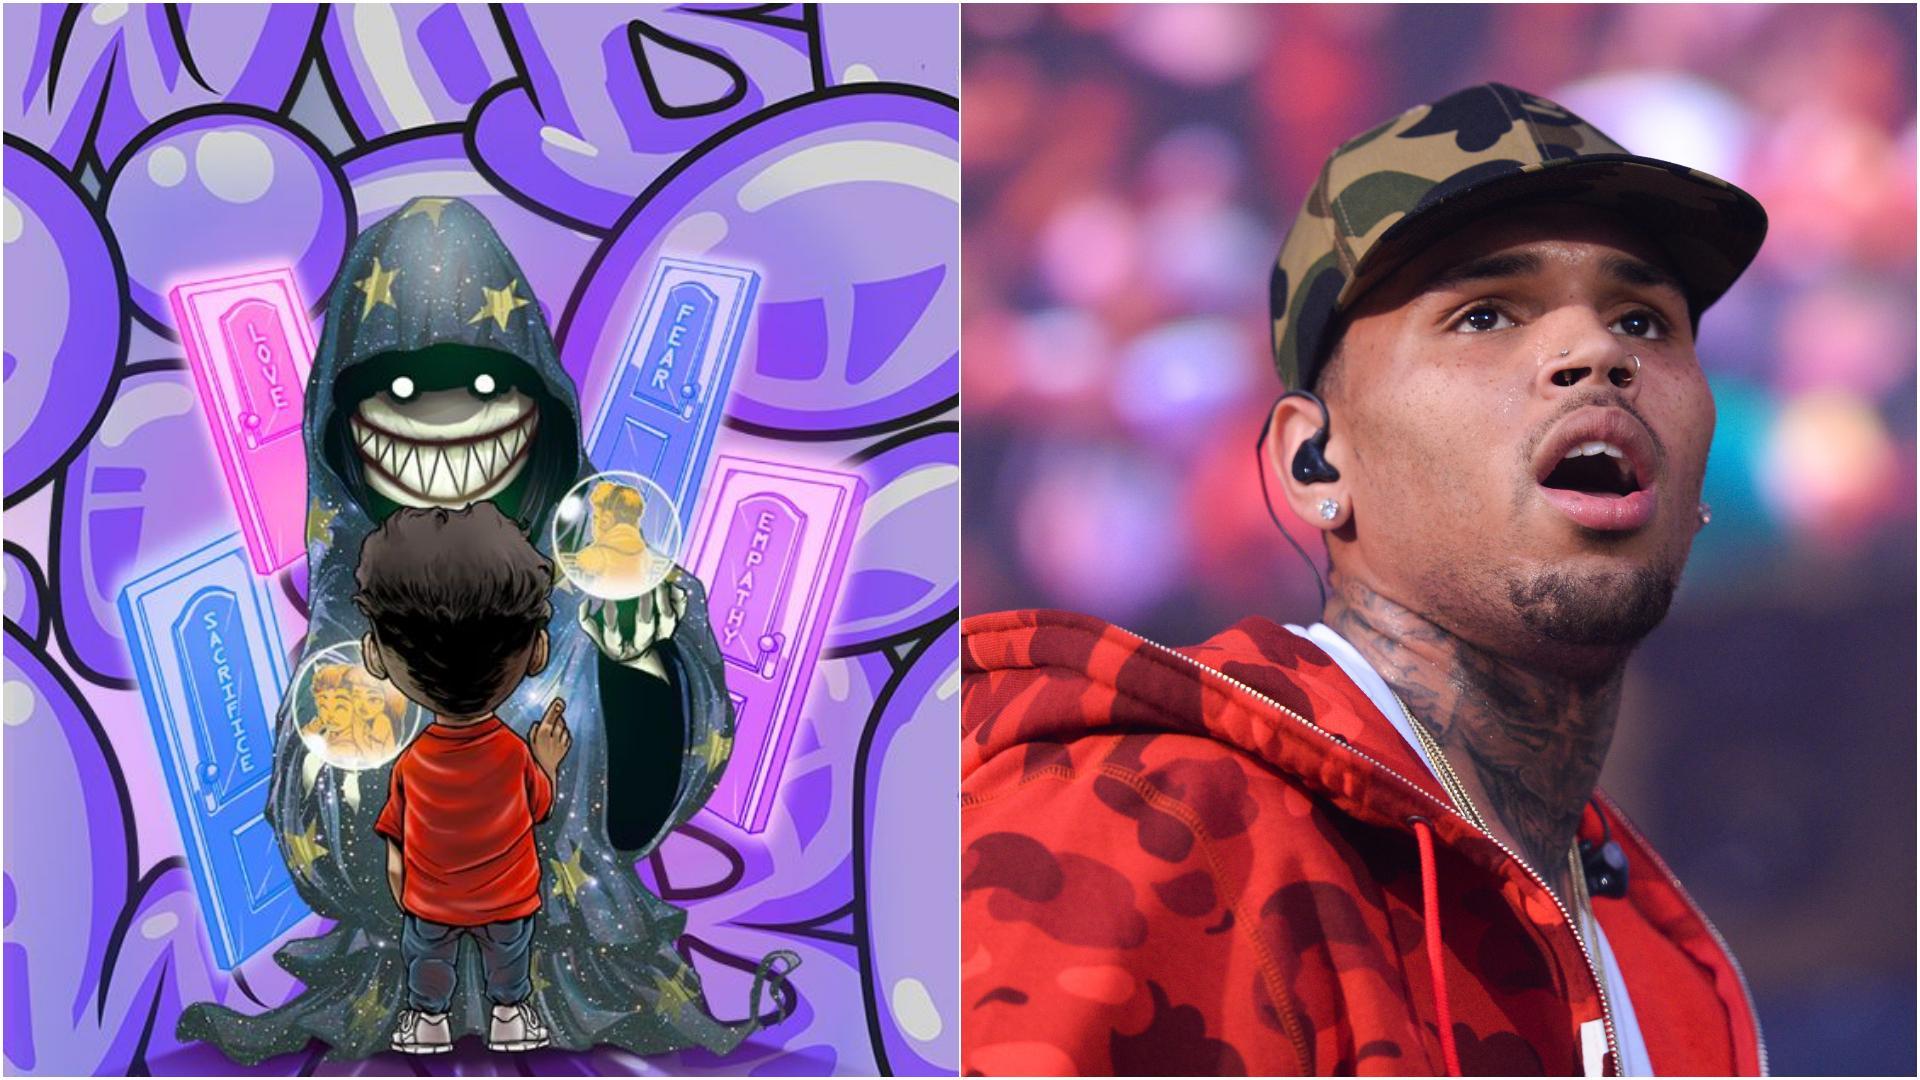 Graffiti Artist Katun Designs Chris Brown's New Single Artwork